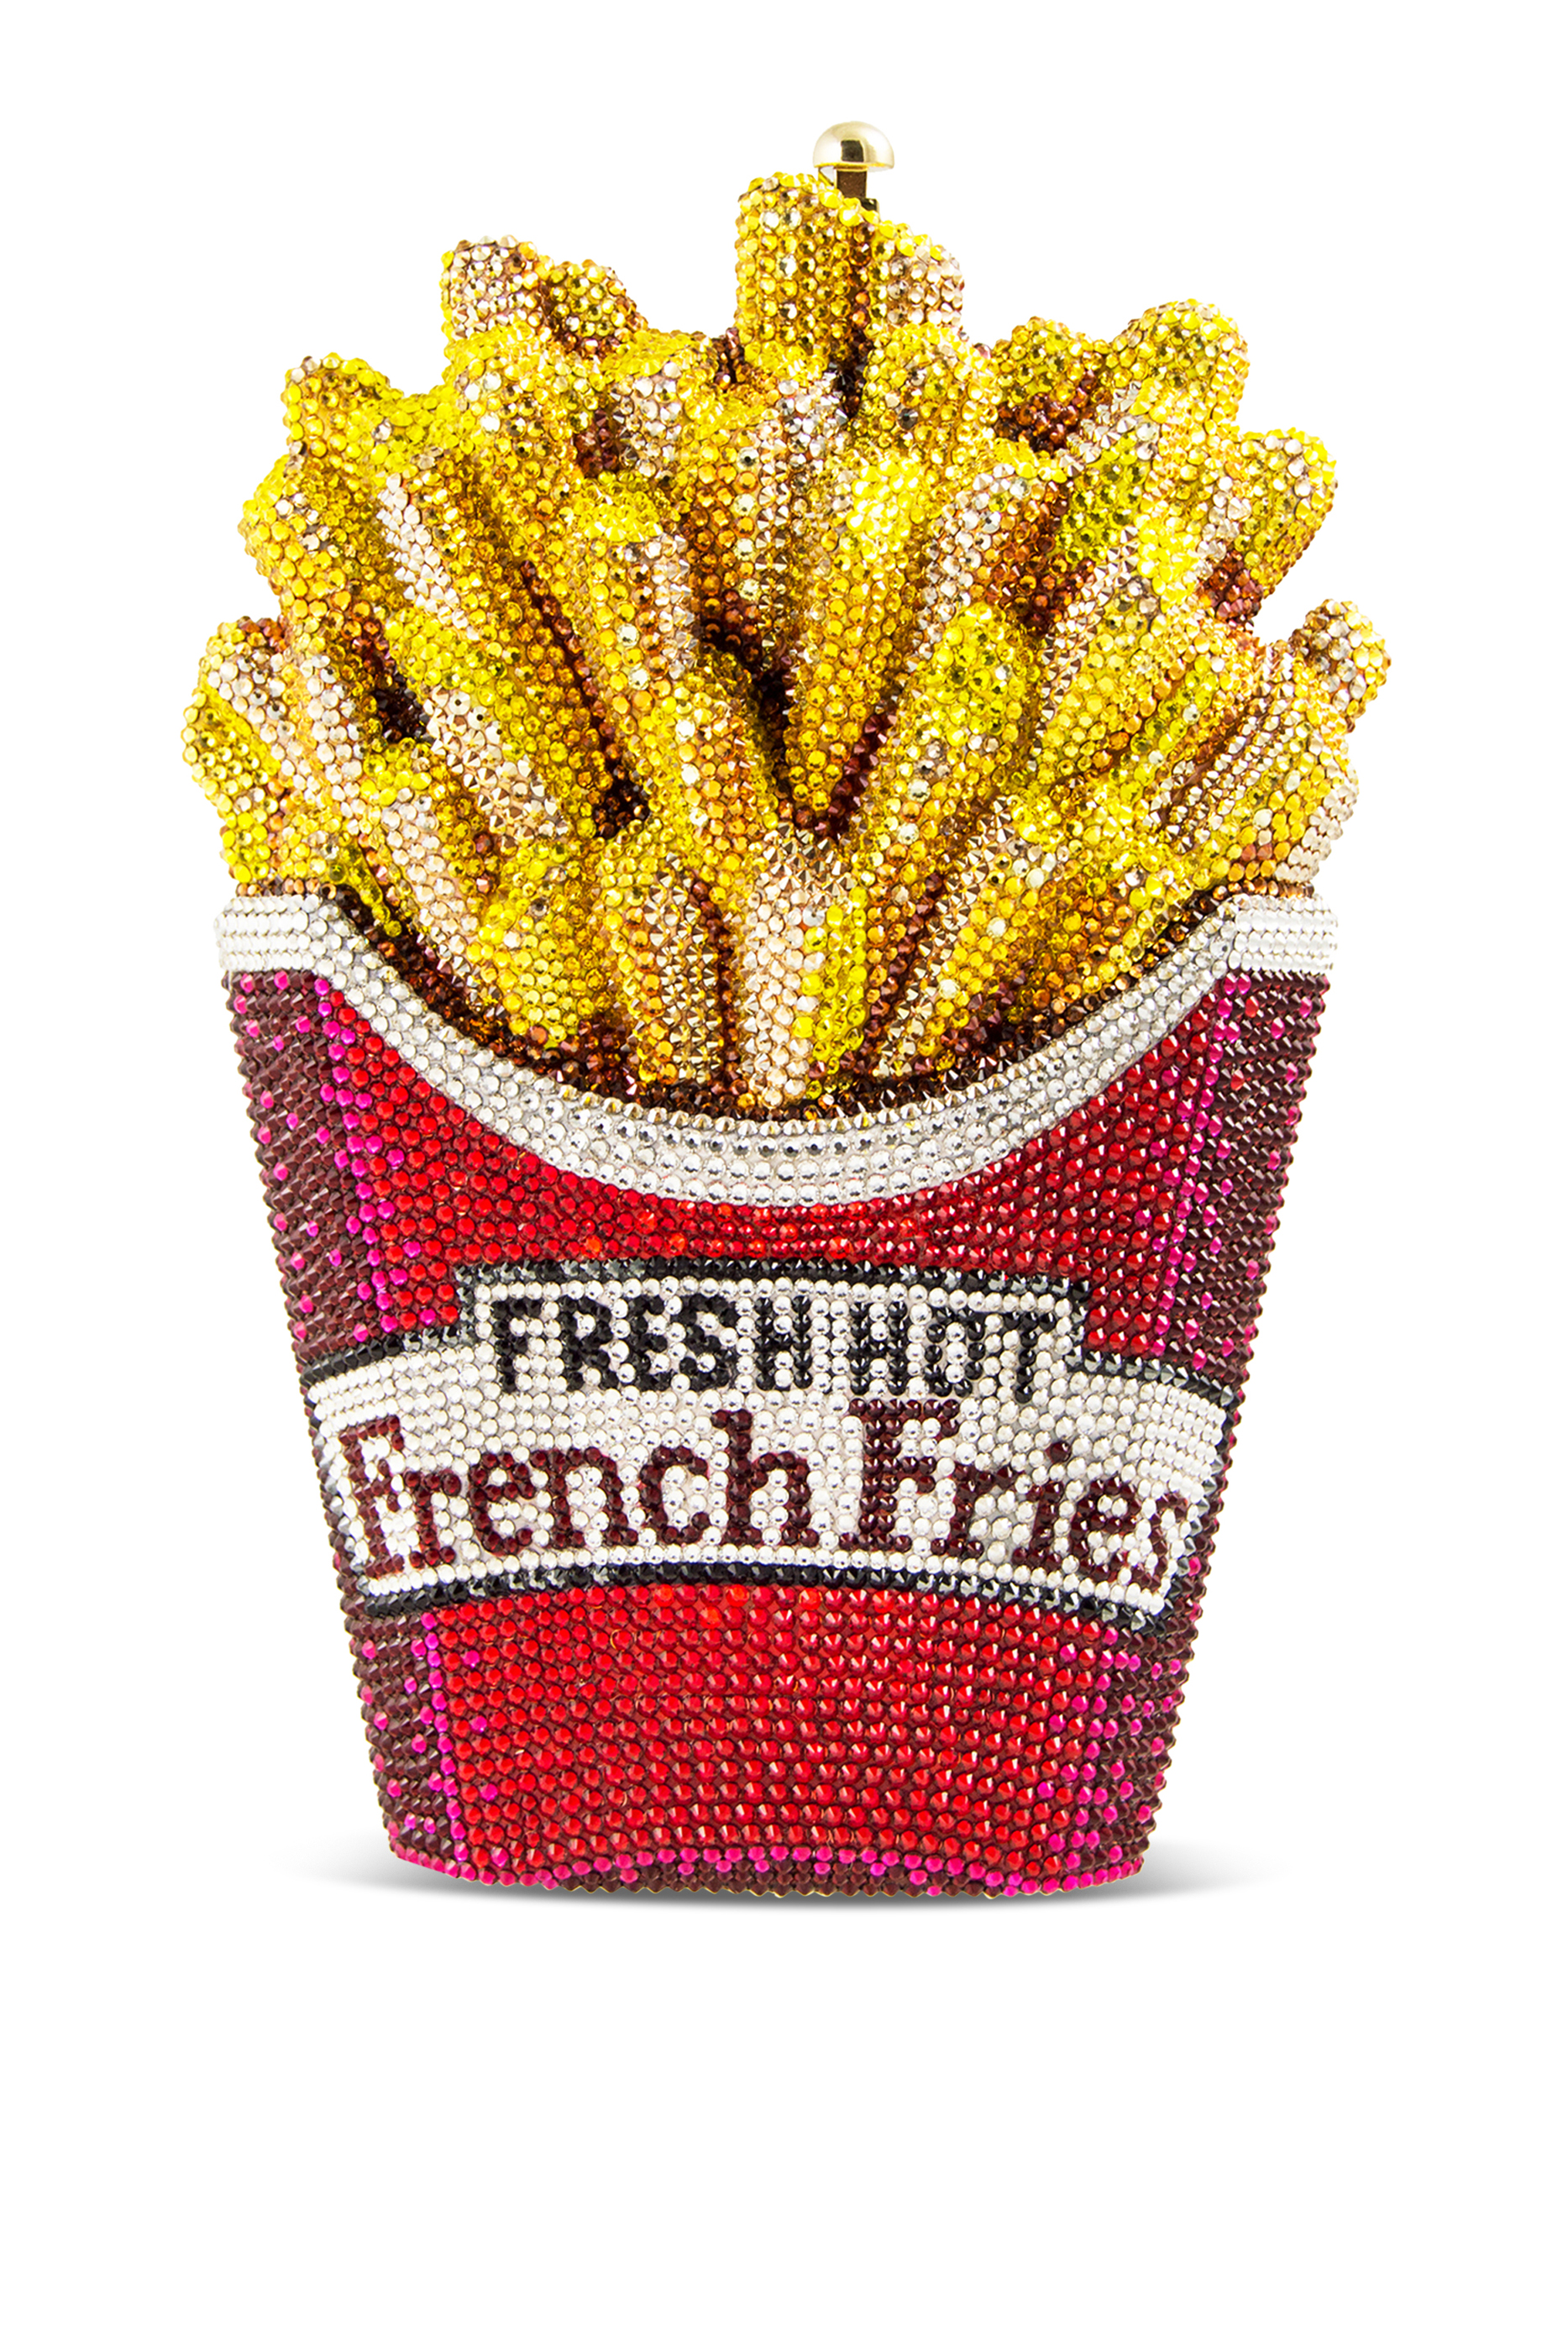 Judith Leiber Rainbow French Fries Clutch